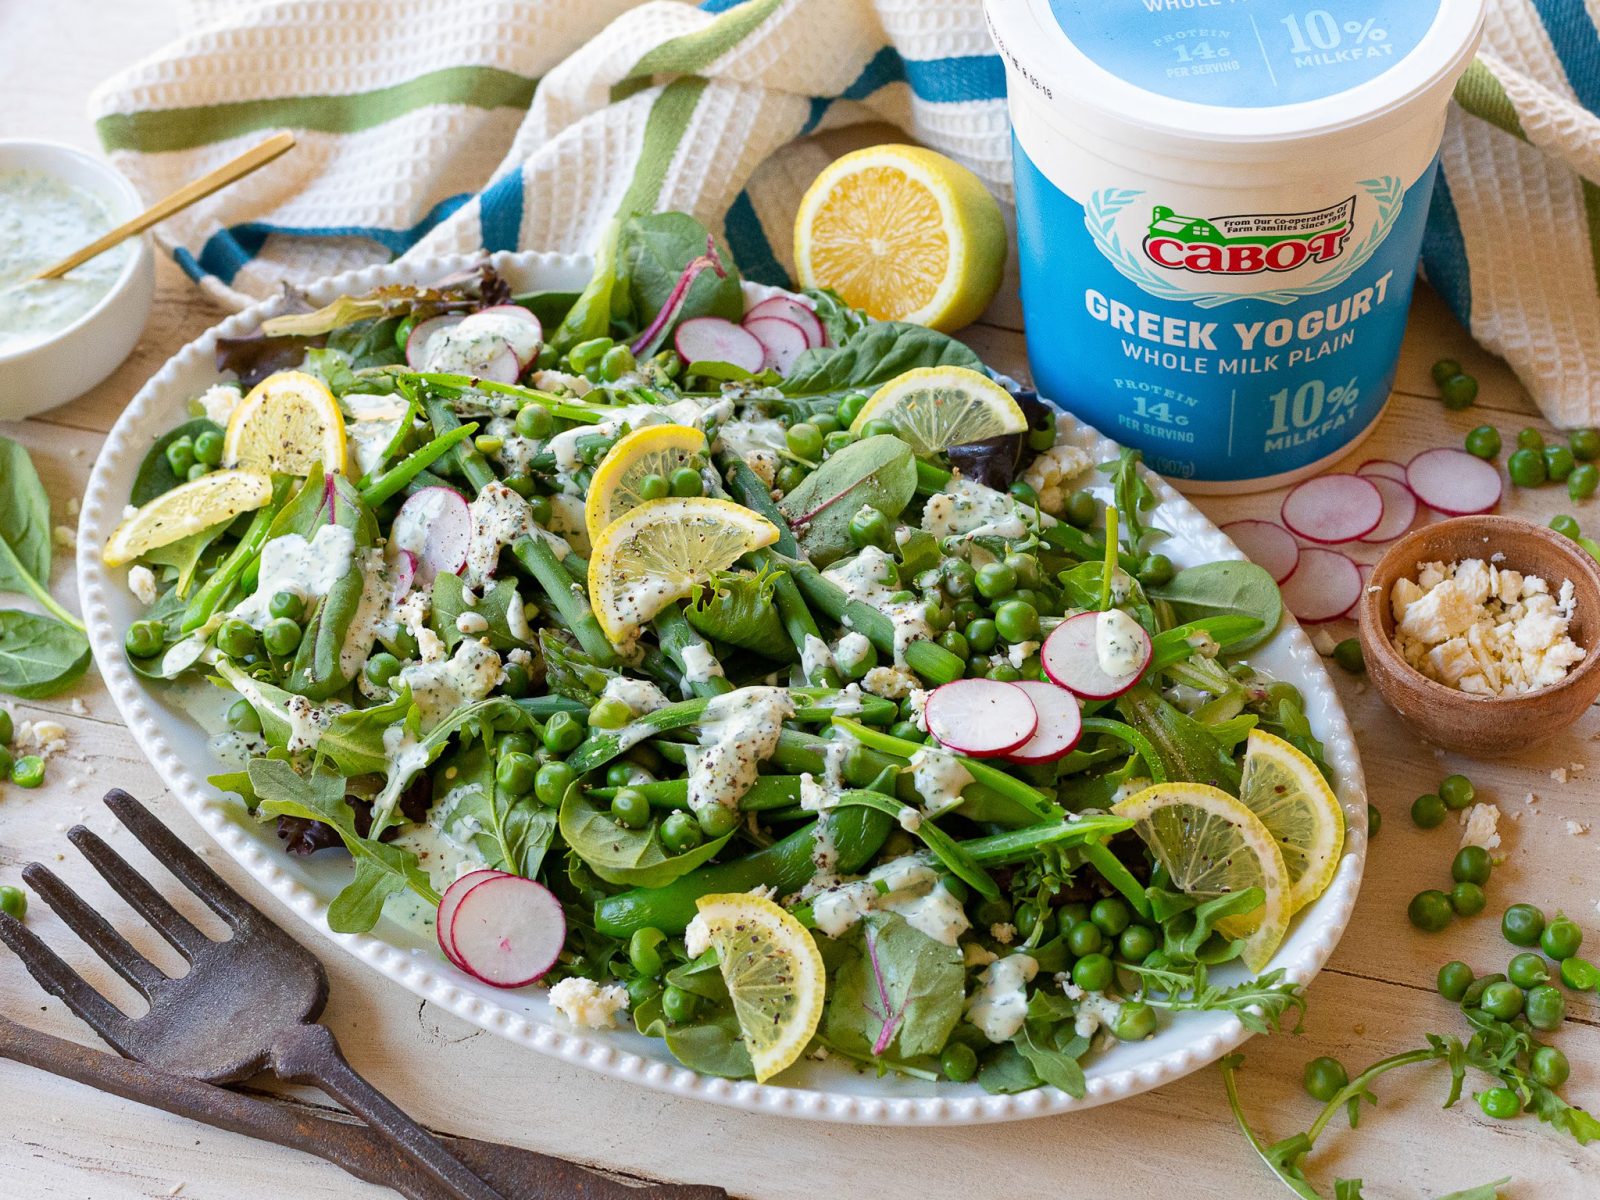 Save $1 On Cabot Greek Yogurt – Perfect Timing For My Green Goddess Spring Pea & Asparagus Salad!